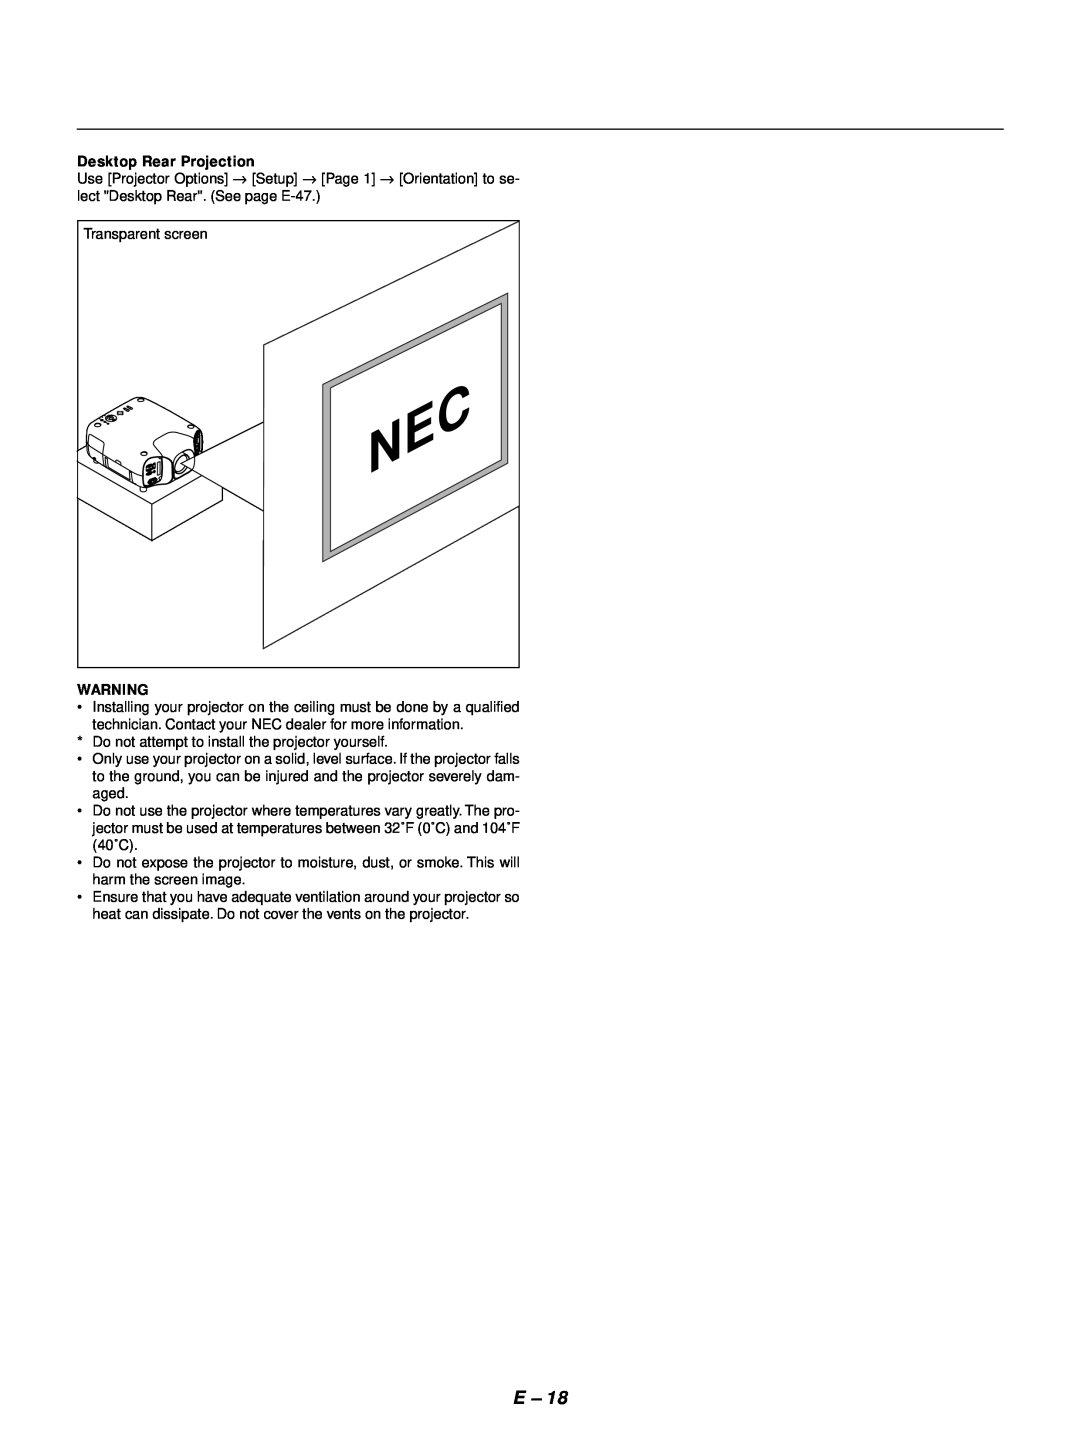 NEC GT1150 user manual Desktop Rear Projection 